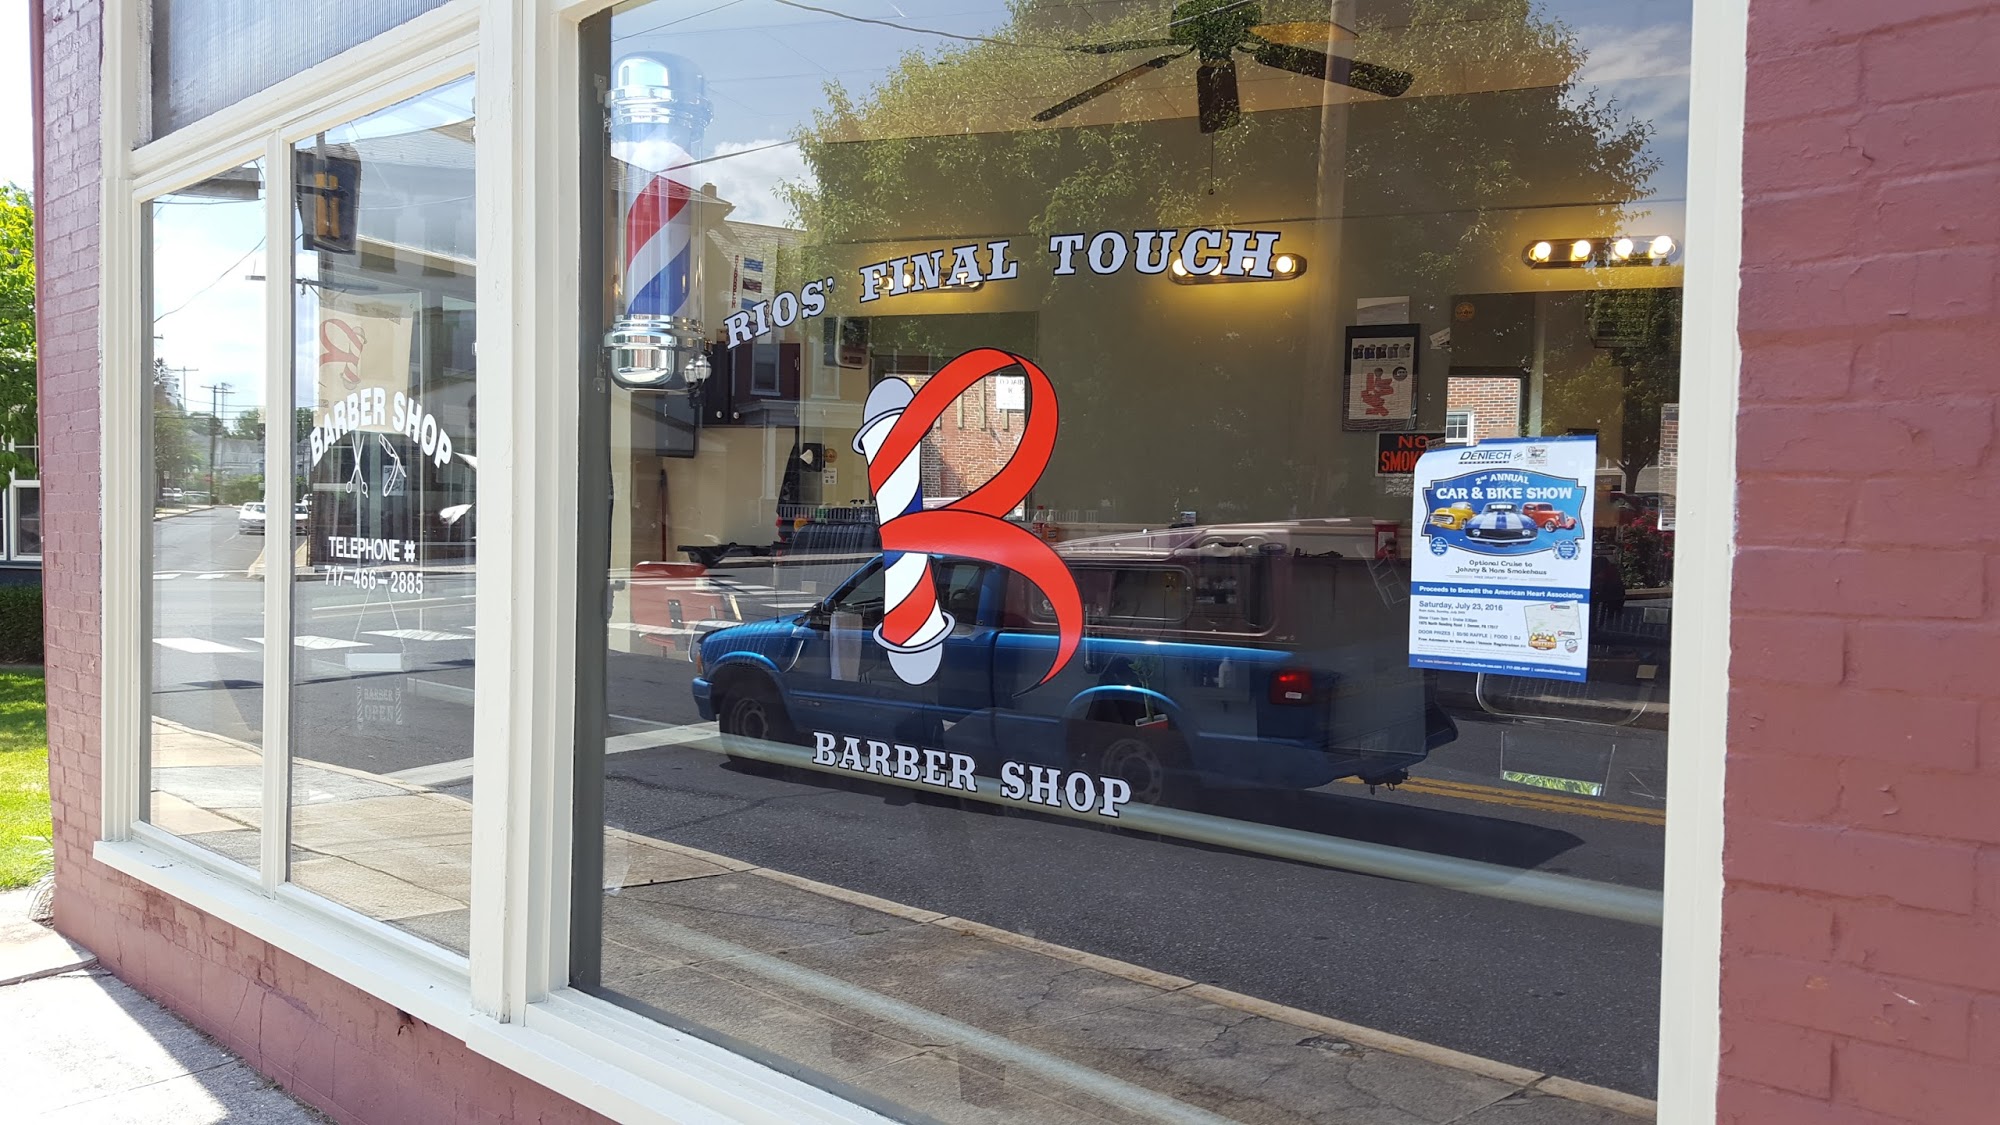 Rios' Final Touch Barber Shop